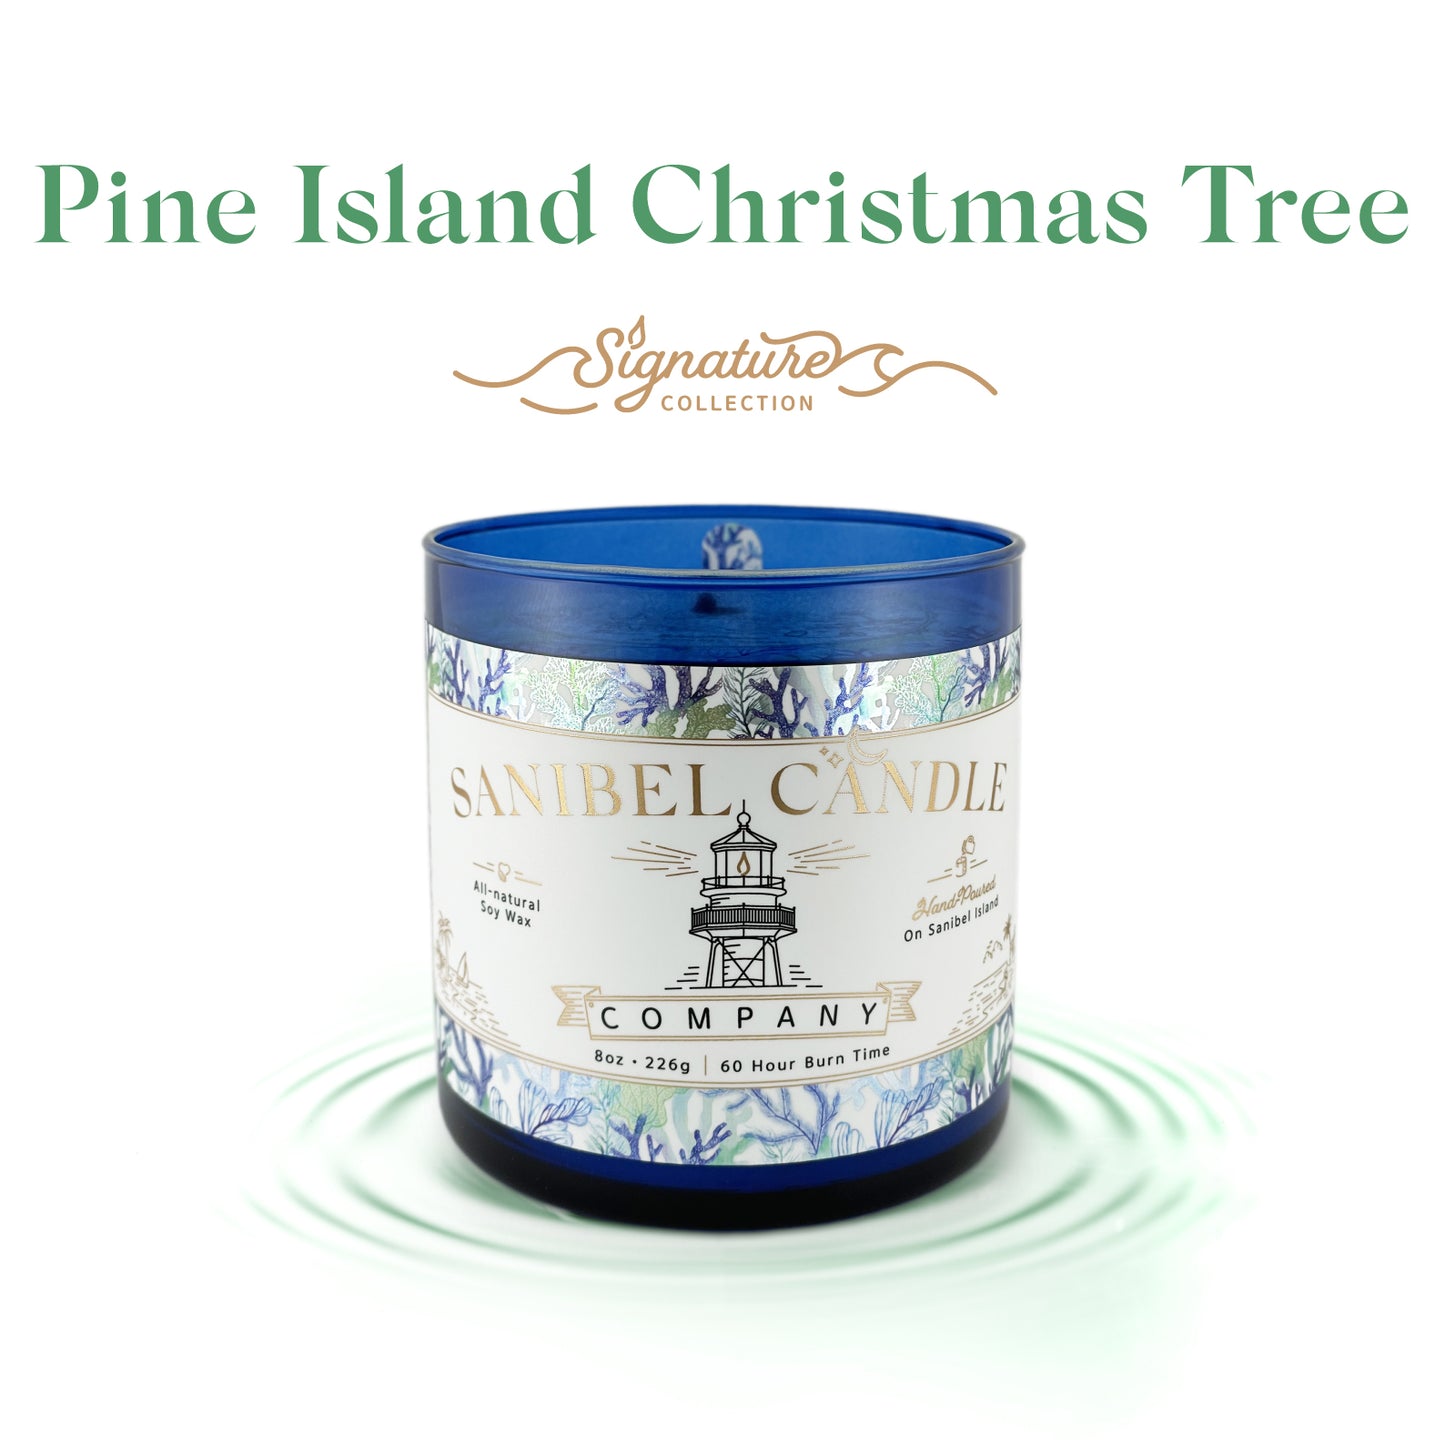 Pine Island Christmas Tree - Signature Candle - 8 oz